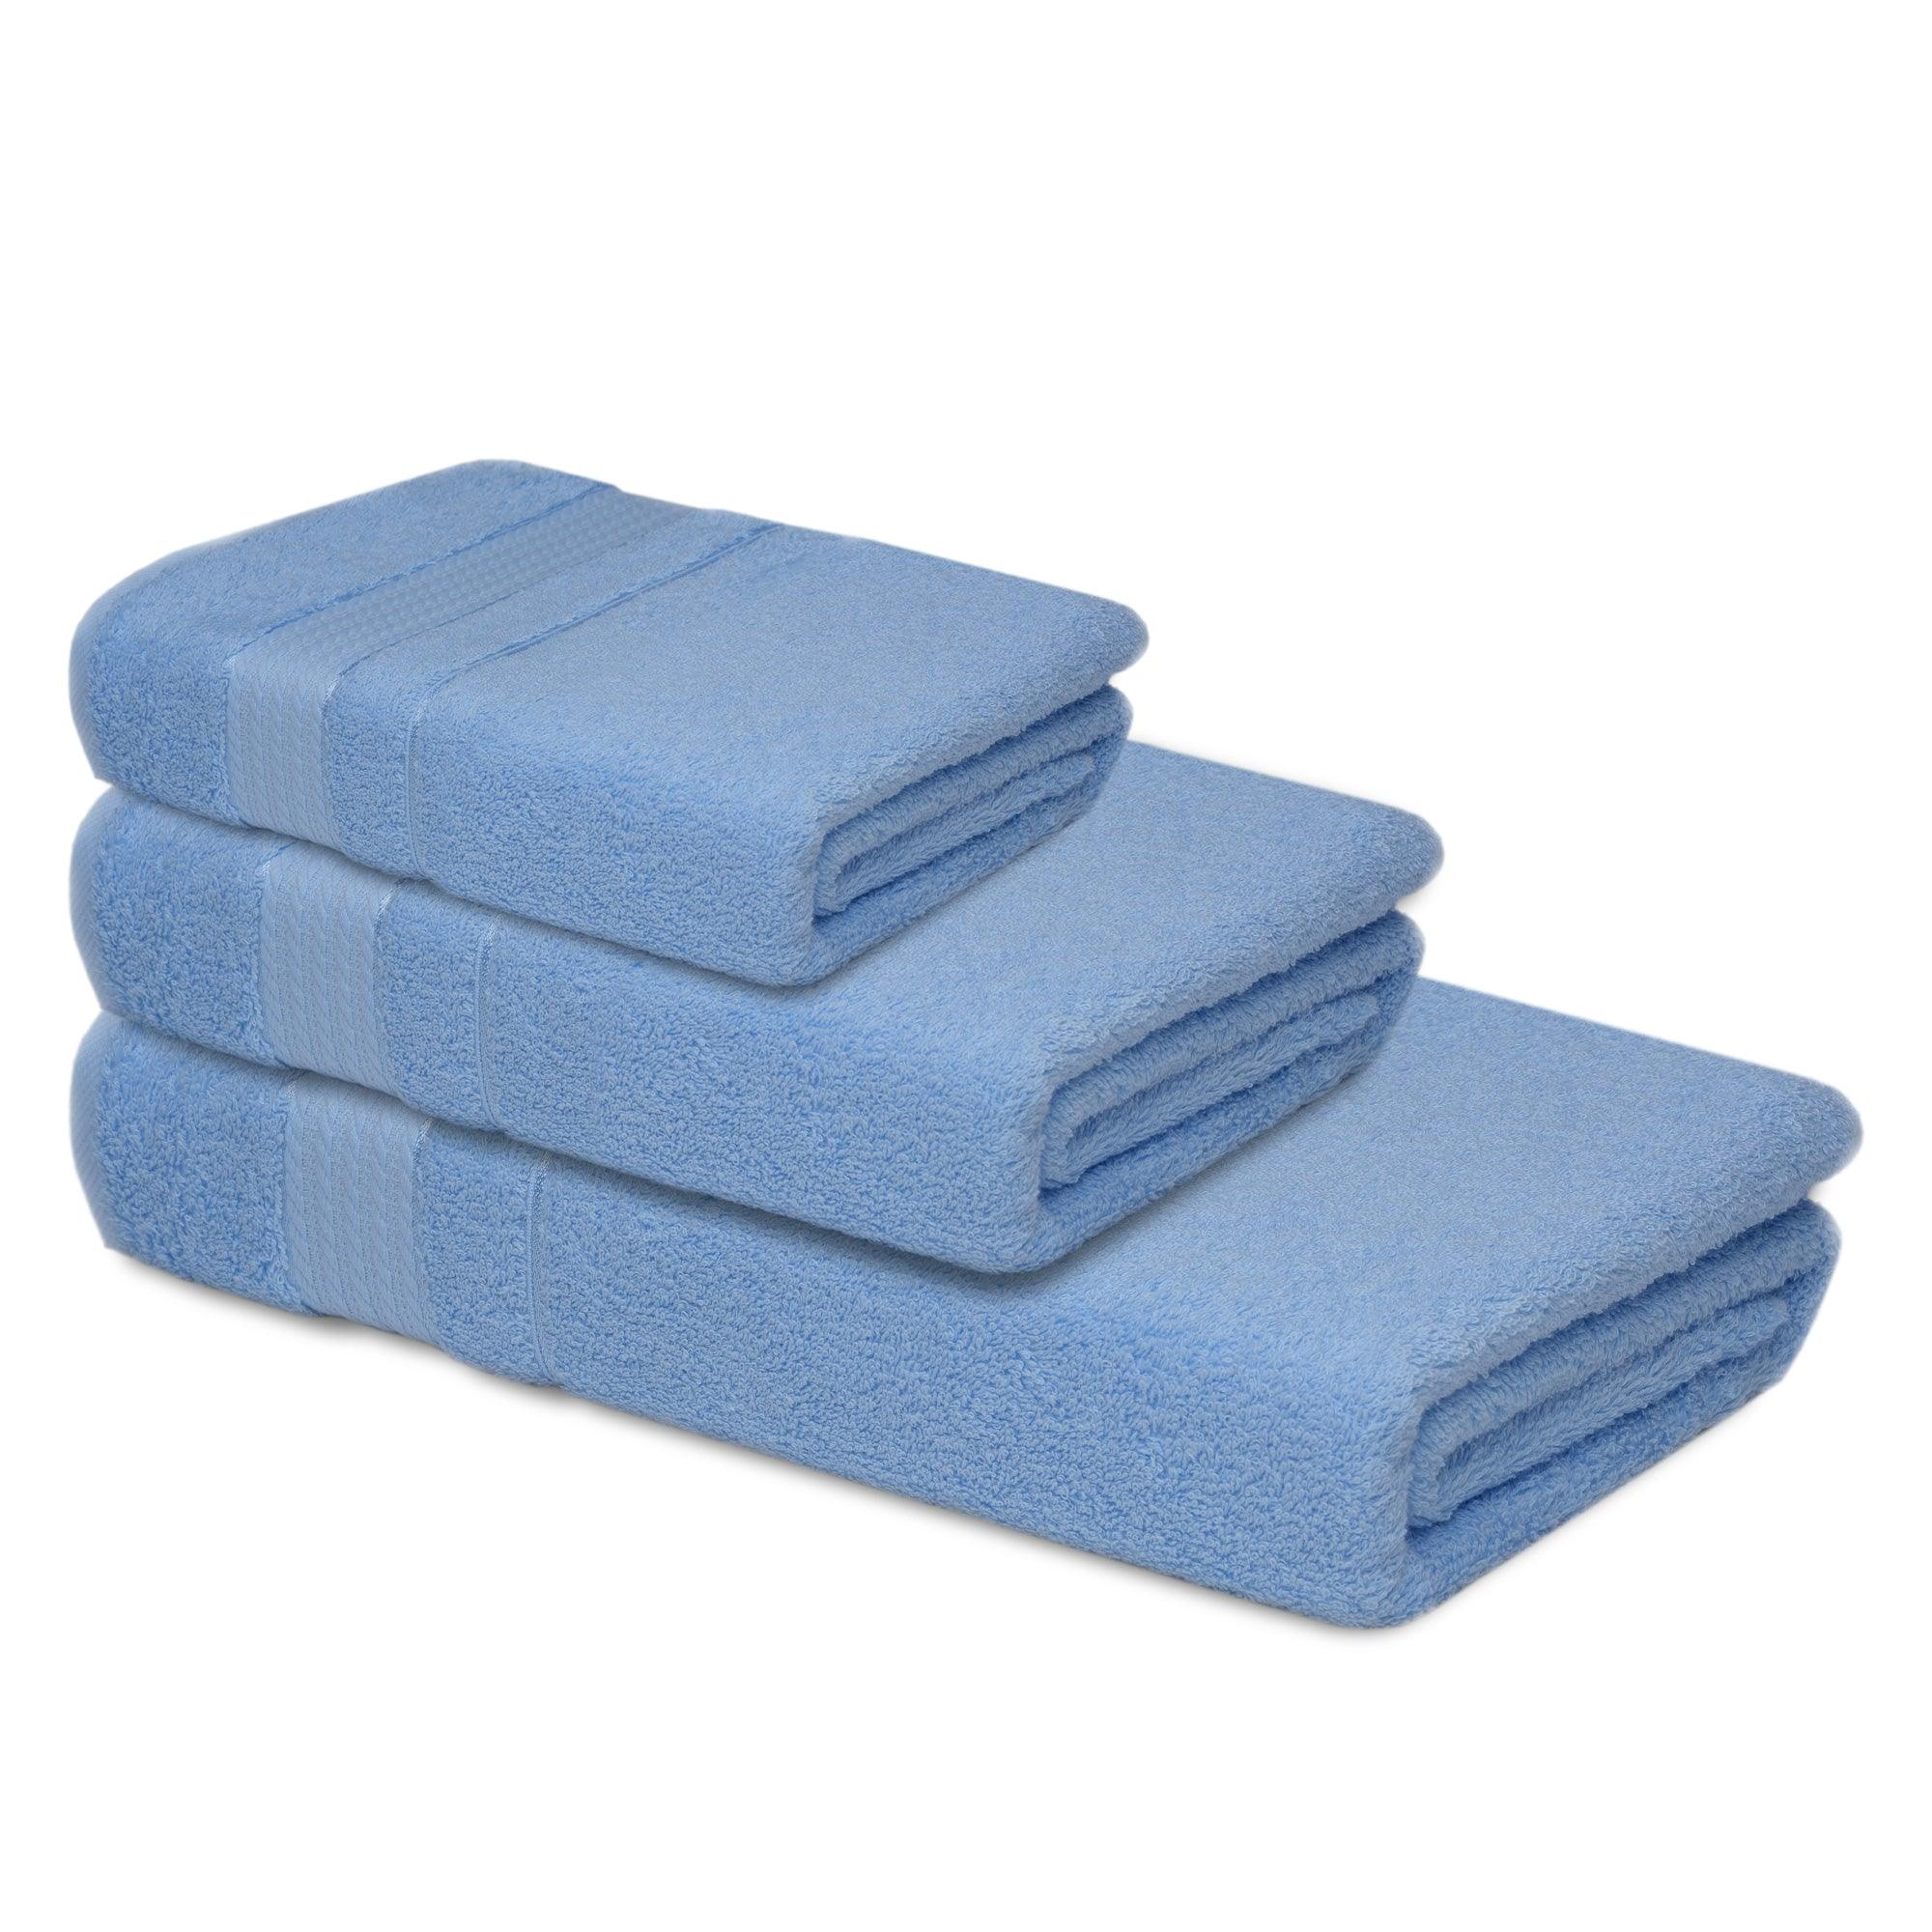 3 Pack Turkish Cotton Towel Set - Multi Size - Bath Towel - Hand